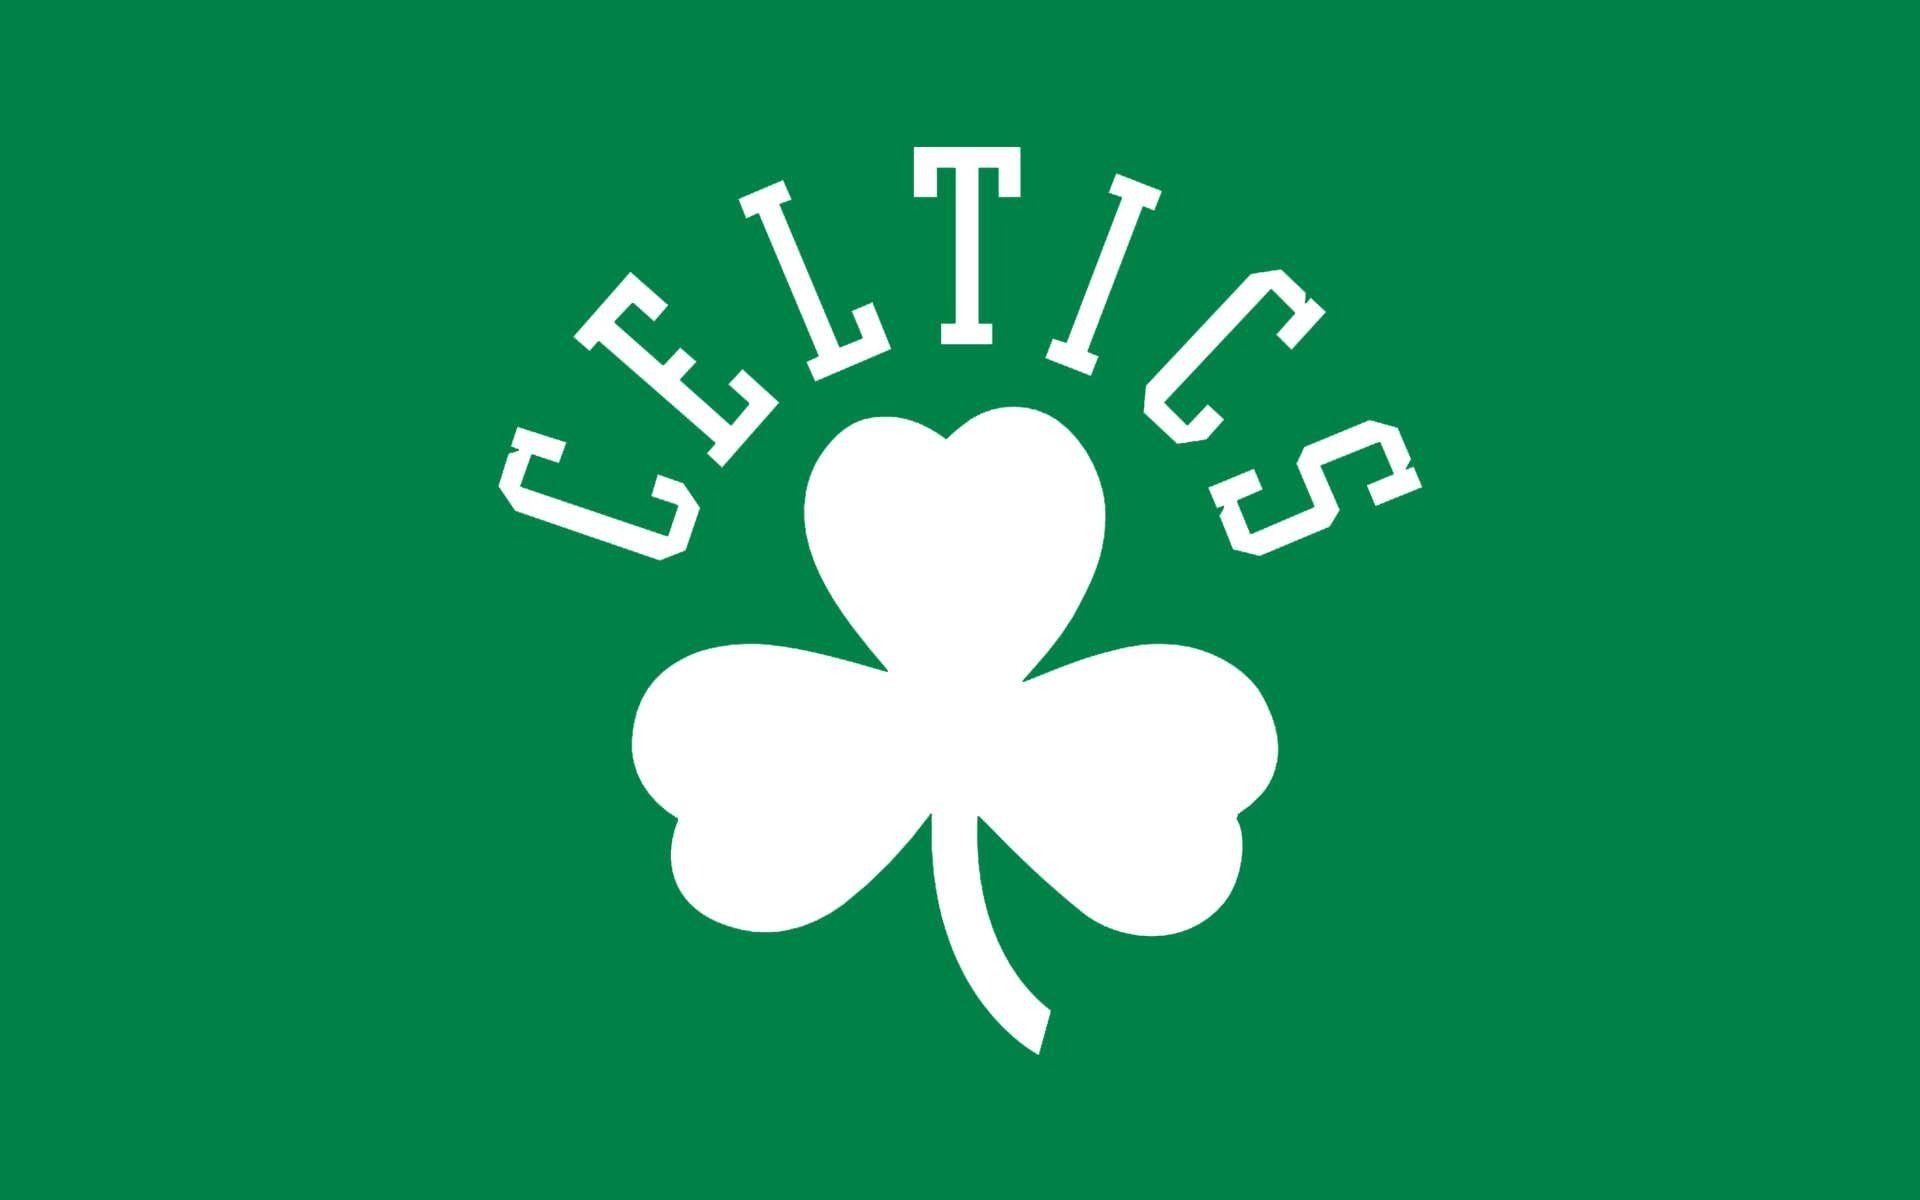 Xo Wallpaper Image) Celtics Logo Wallpaper & Background Download